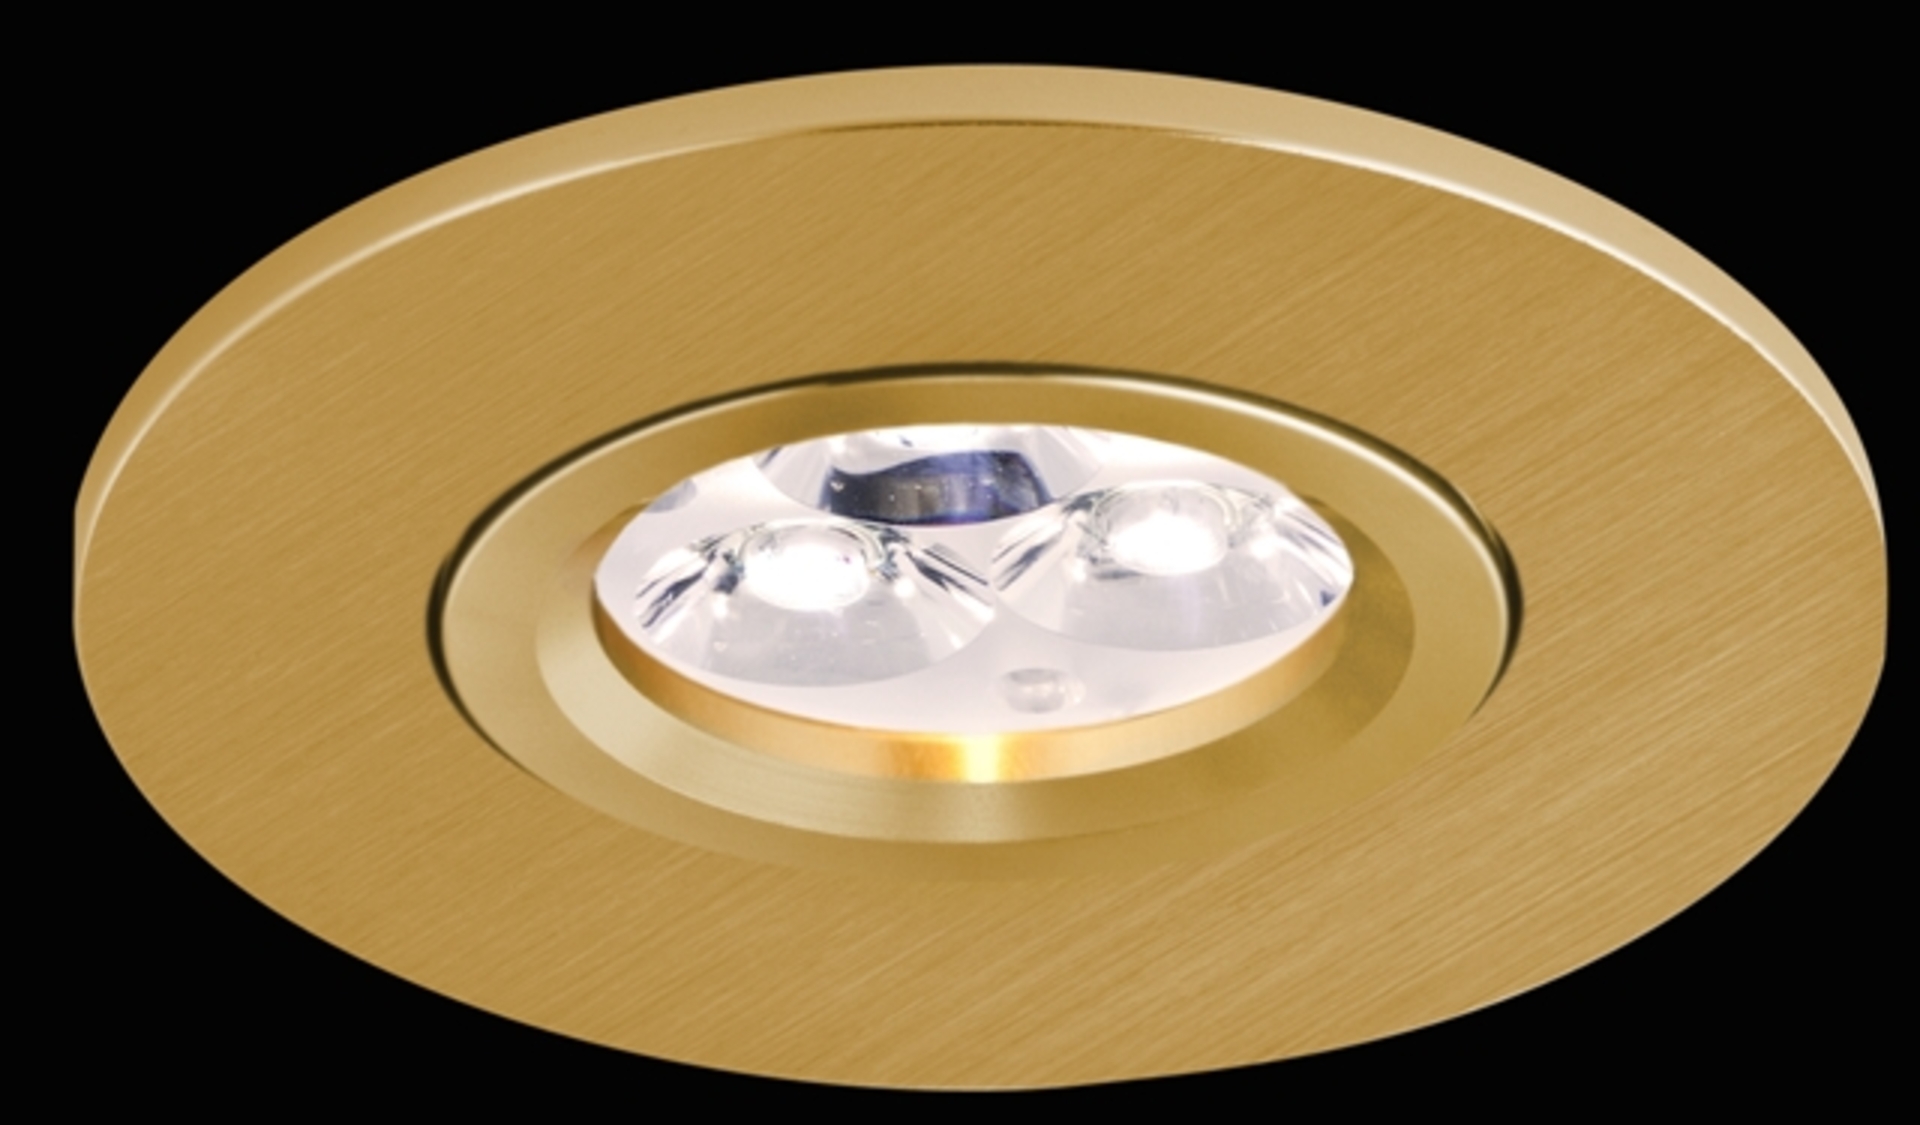 BPM Vestavné svítidlo Aluminio Oro, zlatá, 1x50W, 12V 8100 2017